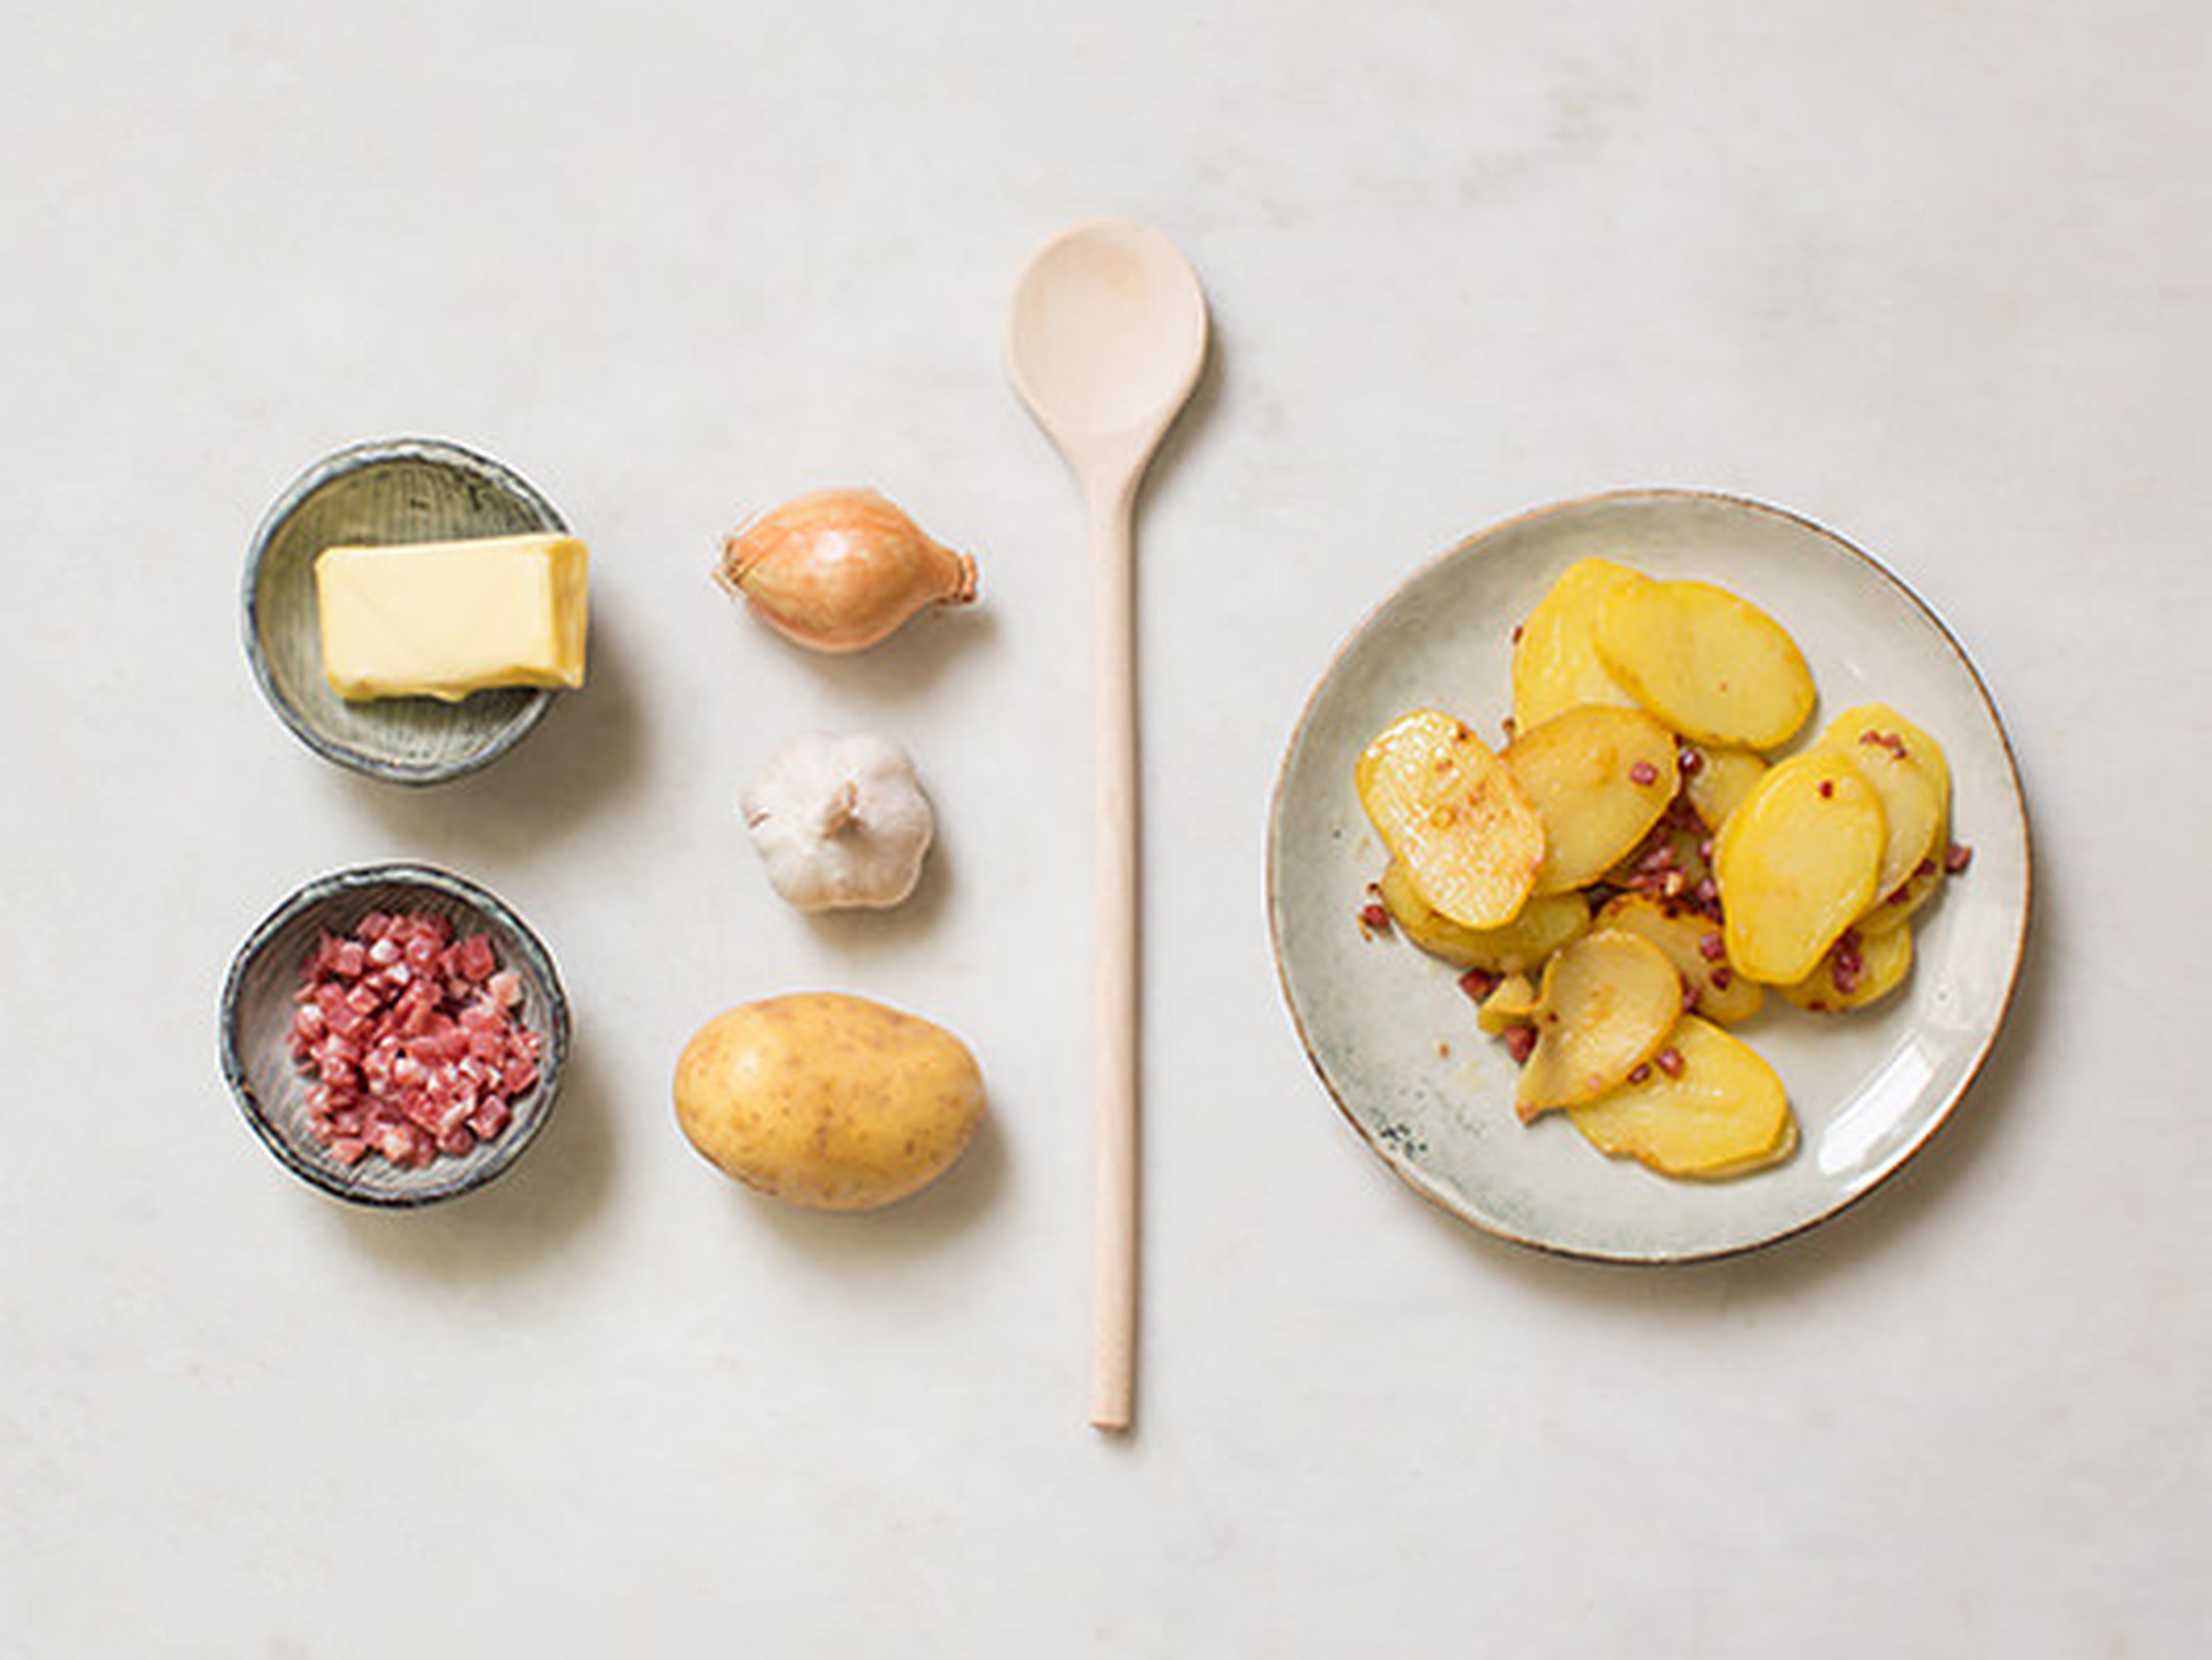 Simple fried potatoes